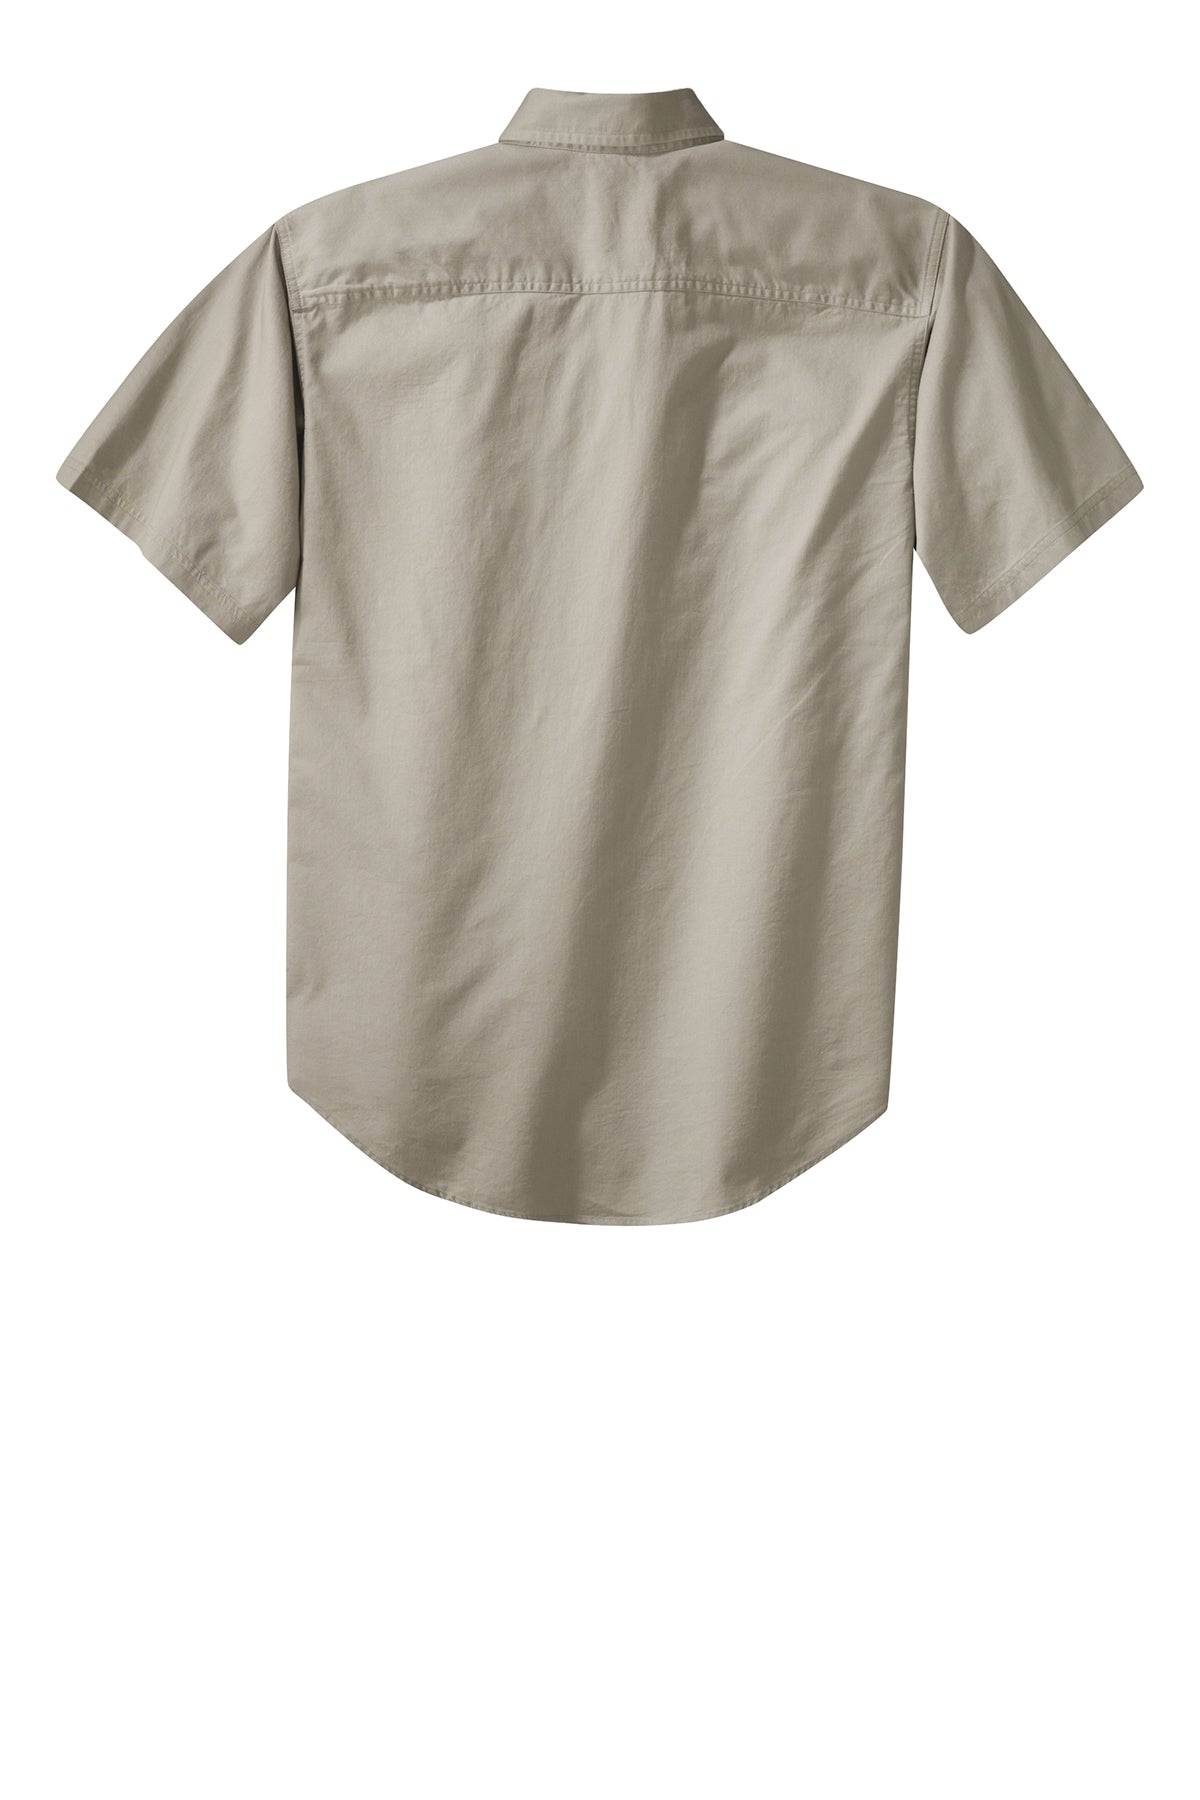 Port Authority® Short Sleeve Twill Shirt - S500T - Stone